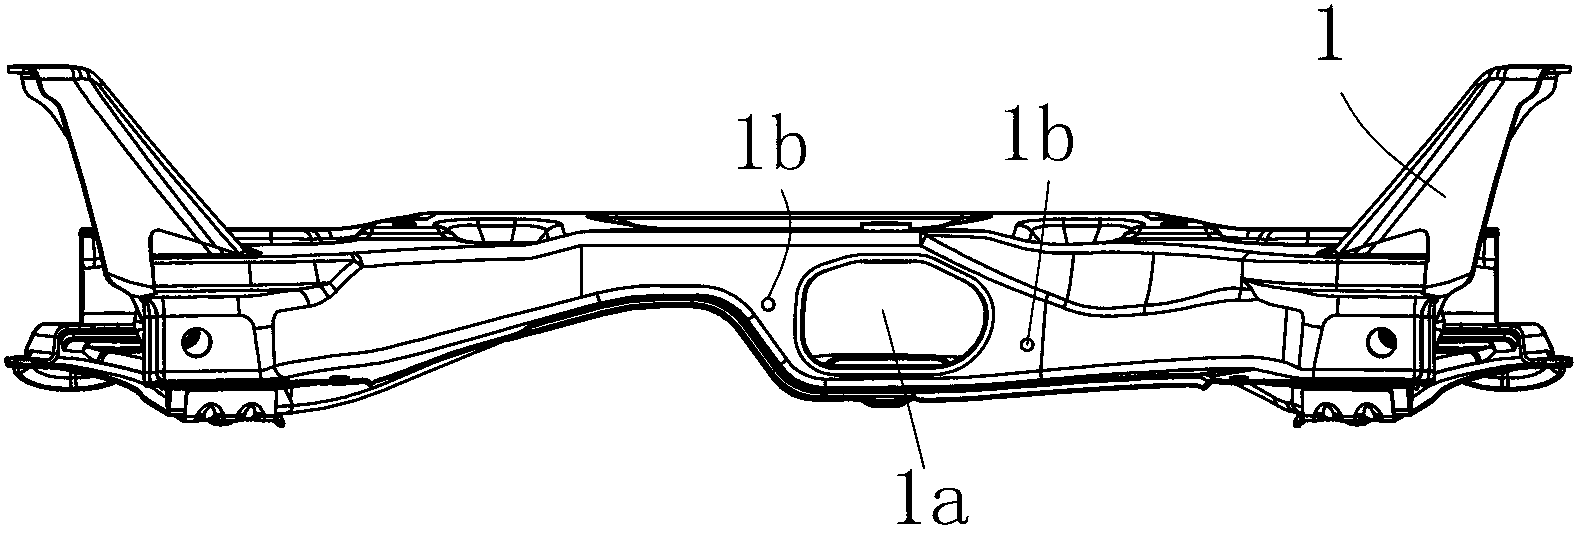 Automobile sub-frame with rear suspension splash guard